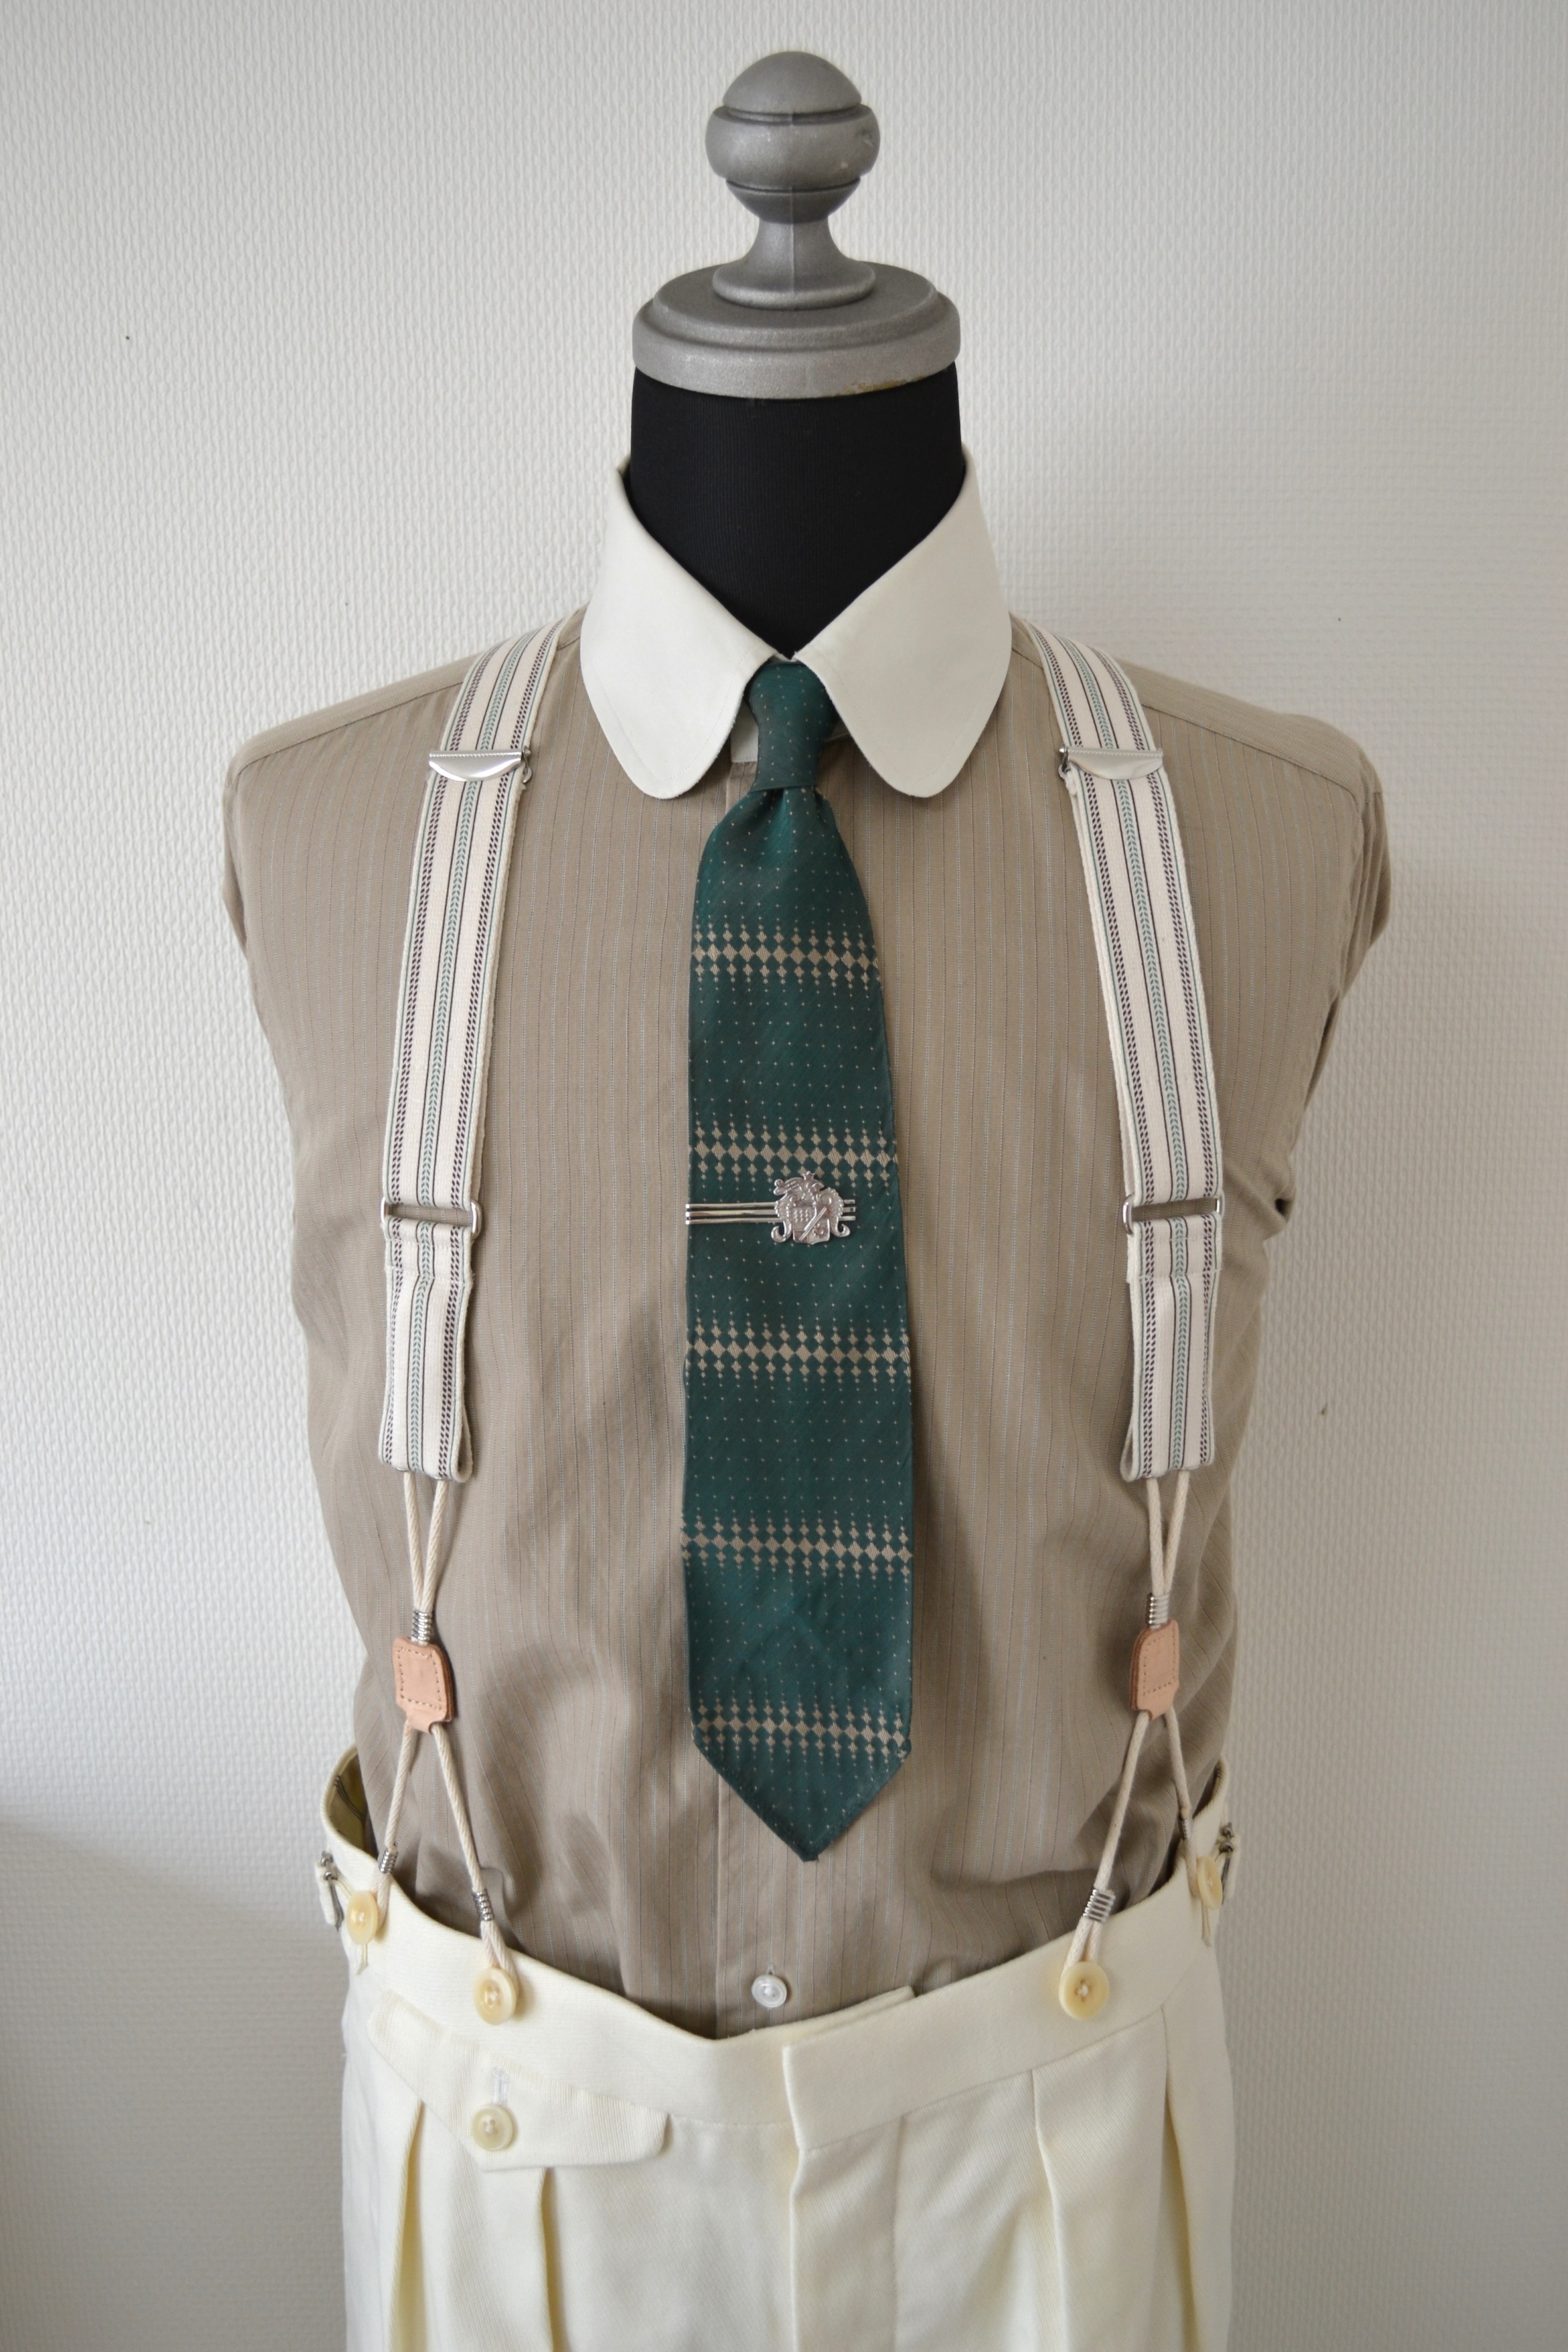 ABC-030 Spring Suspenders | ADJUSTABLE COSTUME